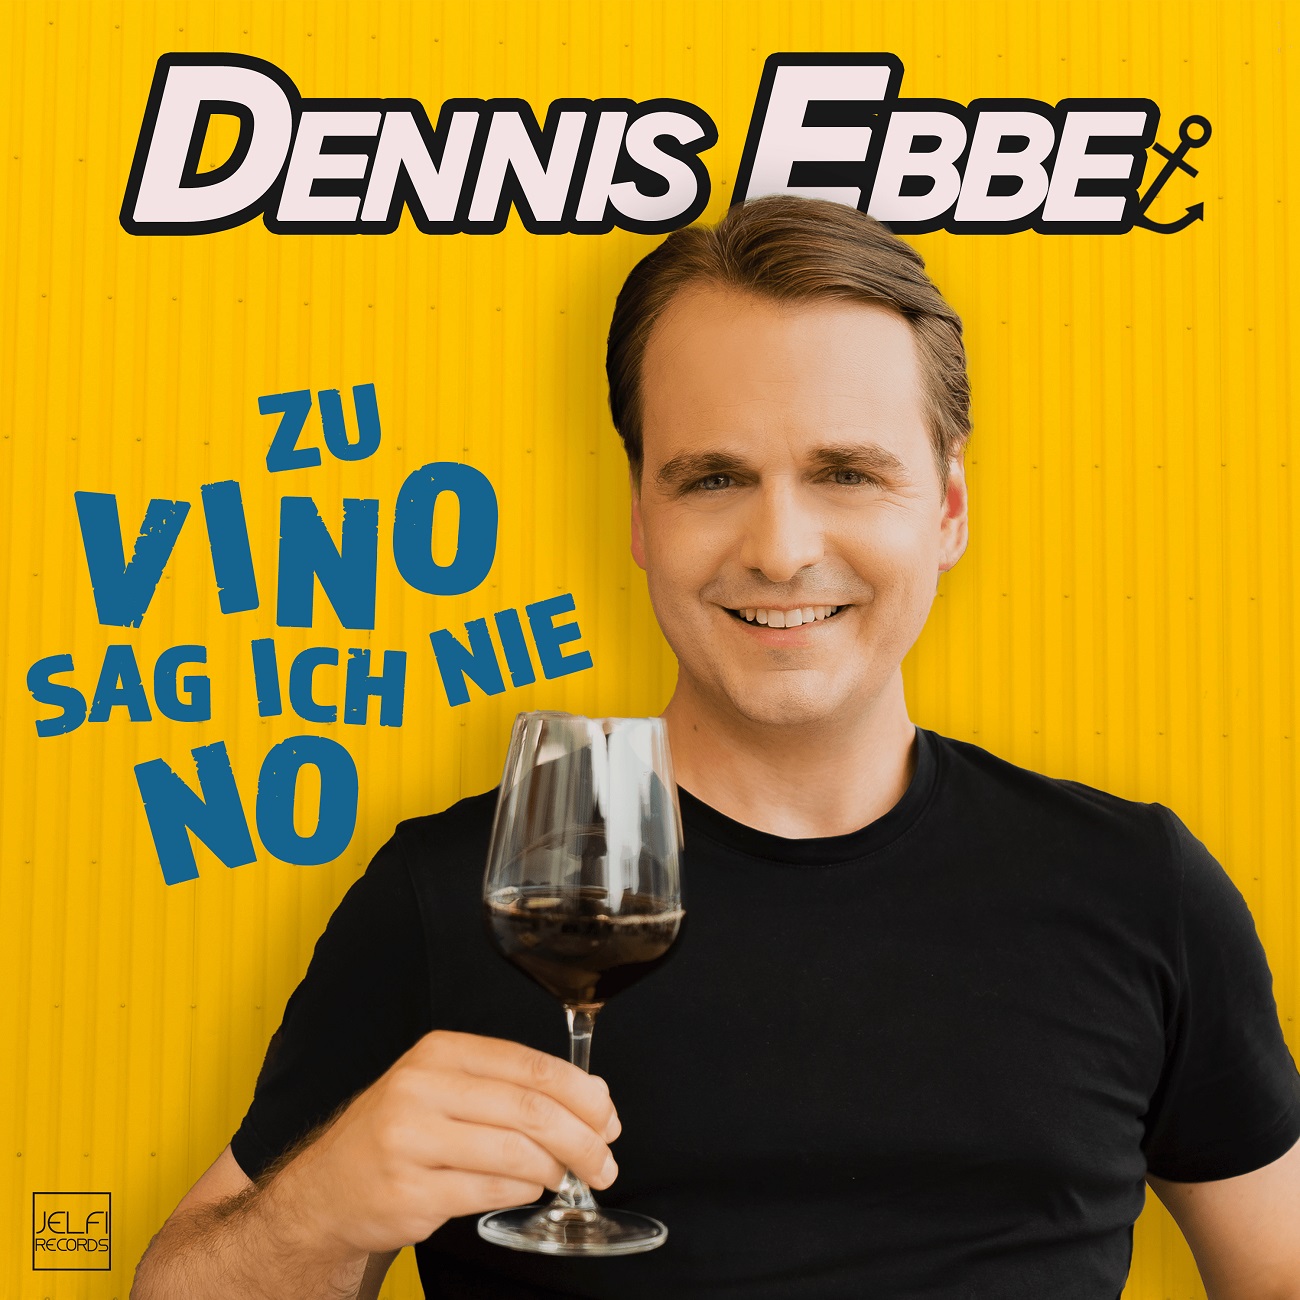 Dennis Ebbe - Zu Vino sag ich nie No - Cover JPG.jpg